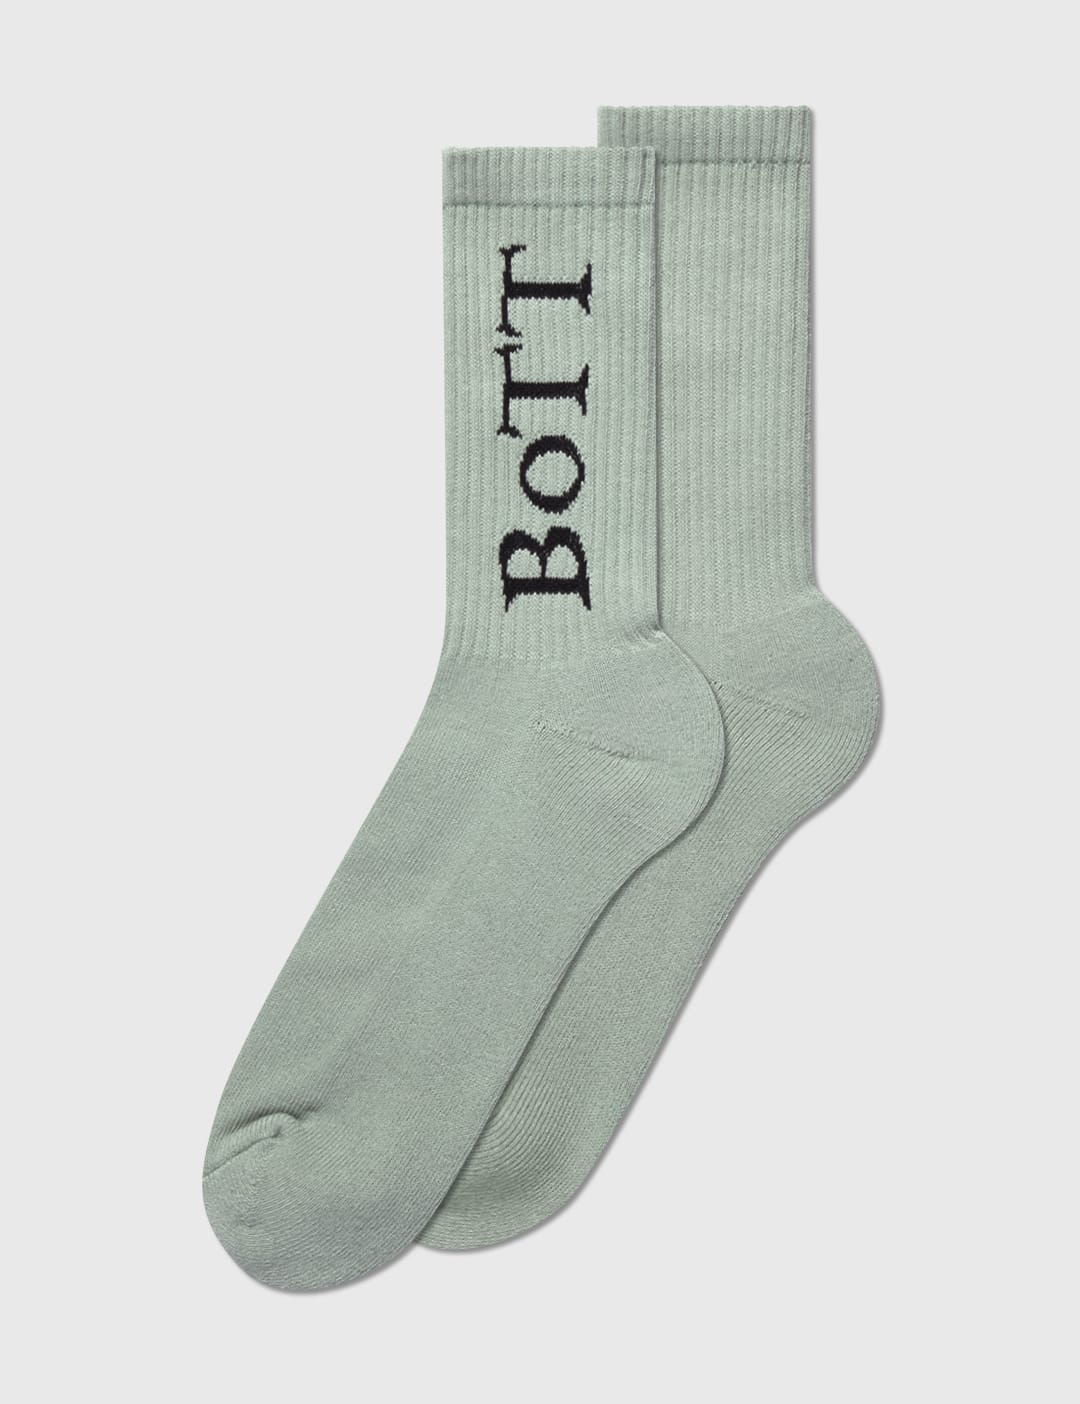 BoTT - OG Logo Socks | HBX - Globally Curated Fashion and